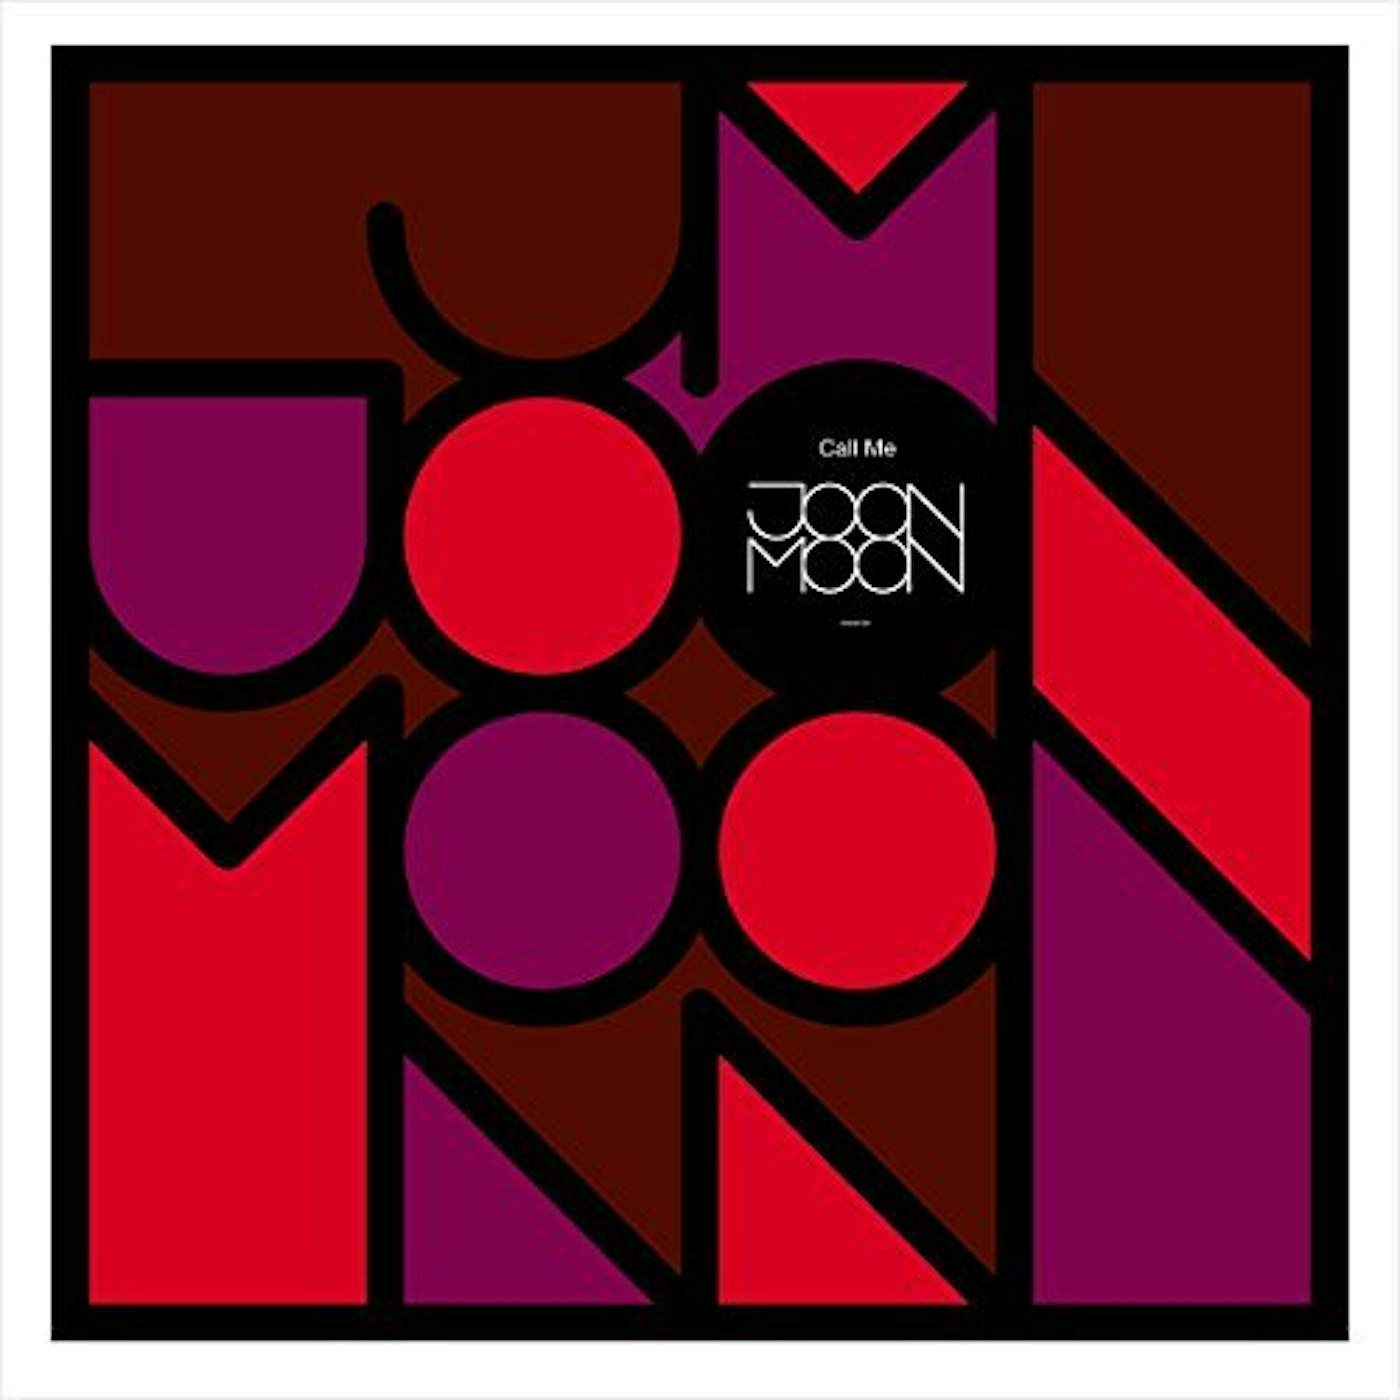 Joon Moon Call Me Vinyl Record